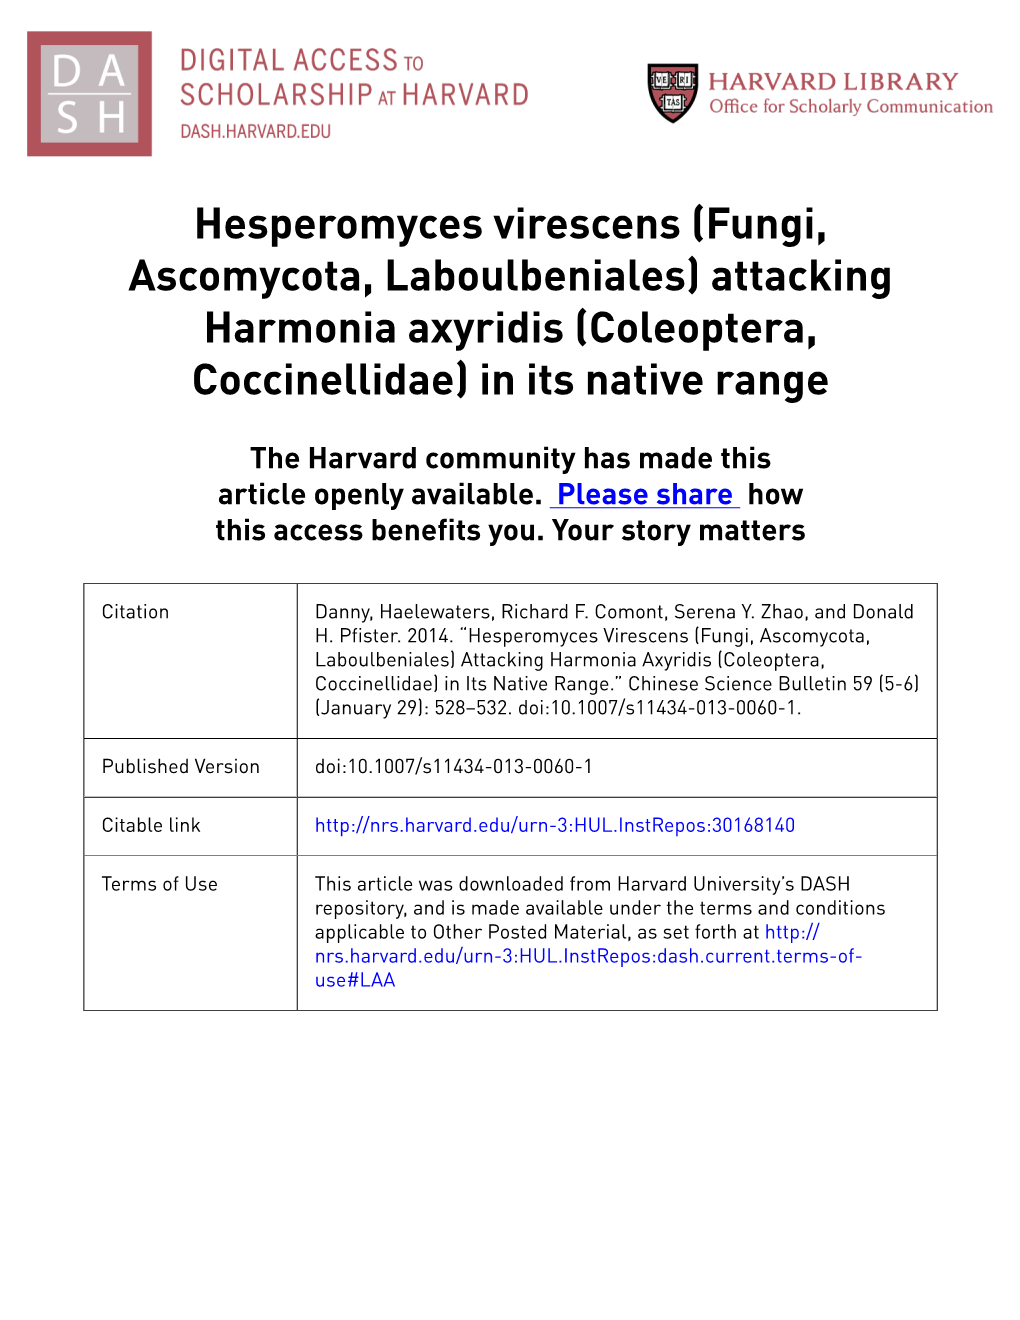 Hesperomyces Virescens (Fungi, Ascomycota, Laboulbeniales) Attacking Harmonia Axyridis (Coleoptera, Coccinellidae) in Its Native Range